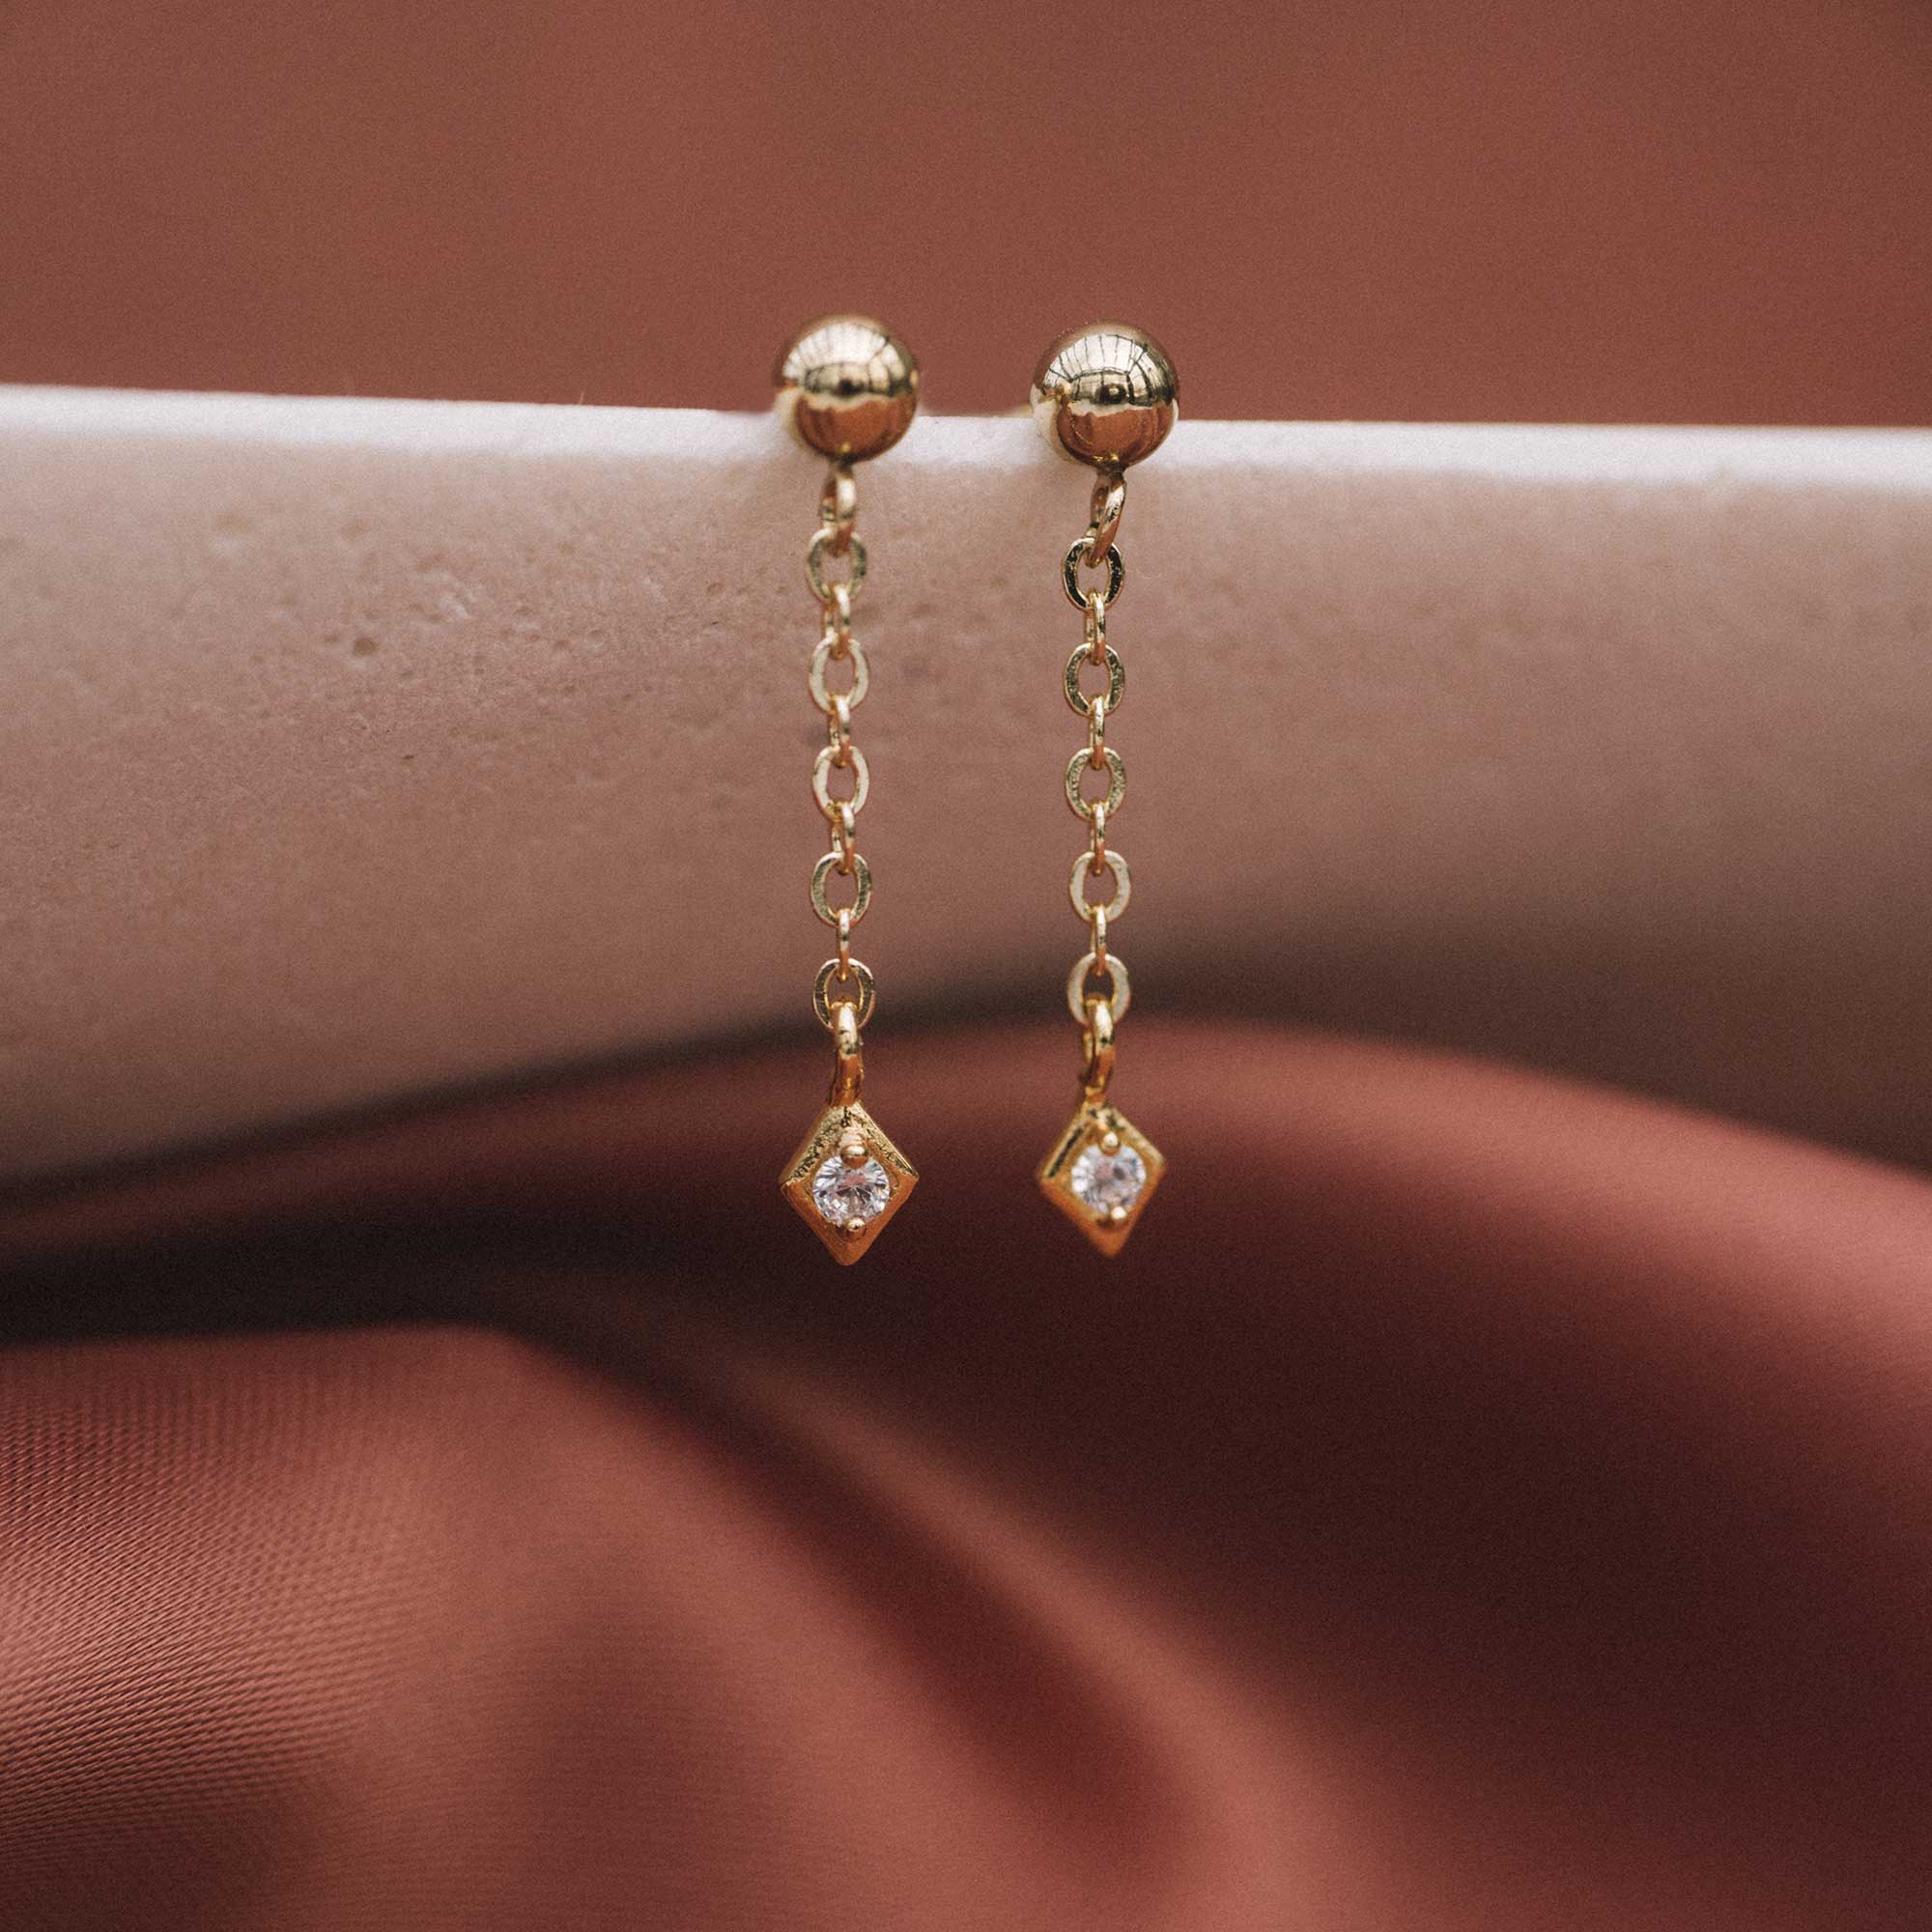 cubic and gold earrings sandrine devost jewelry